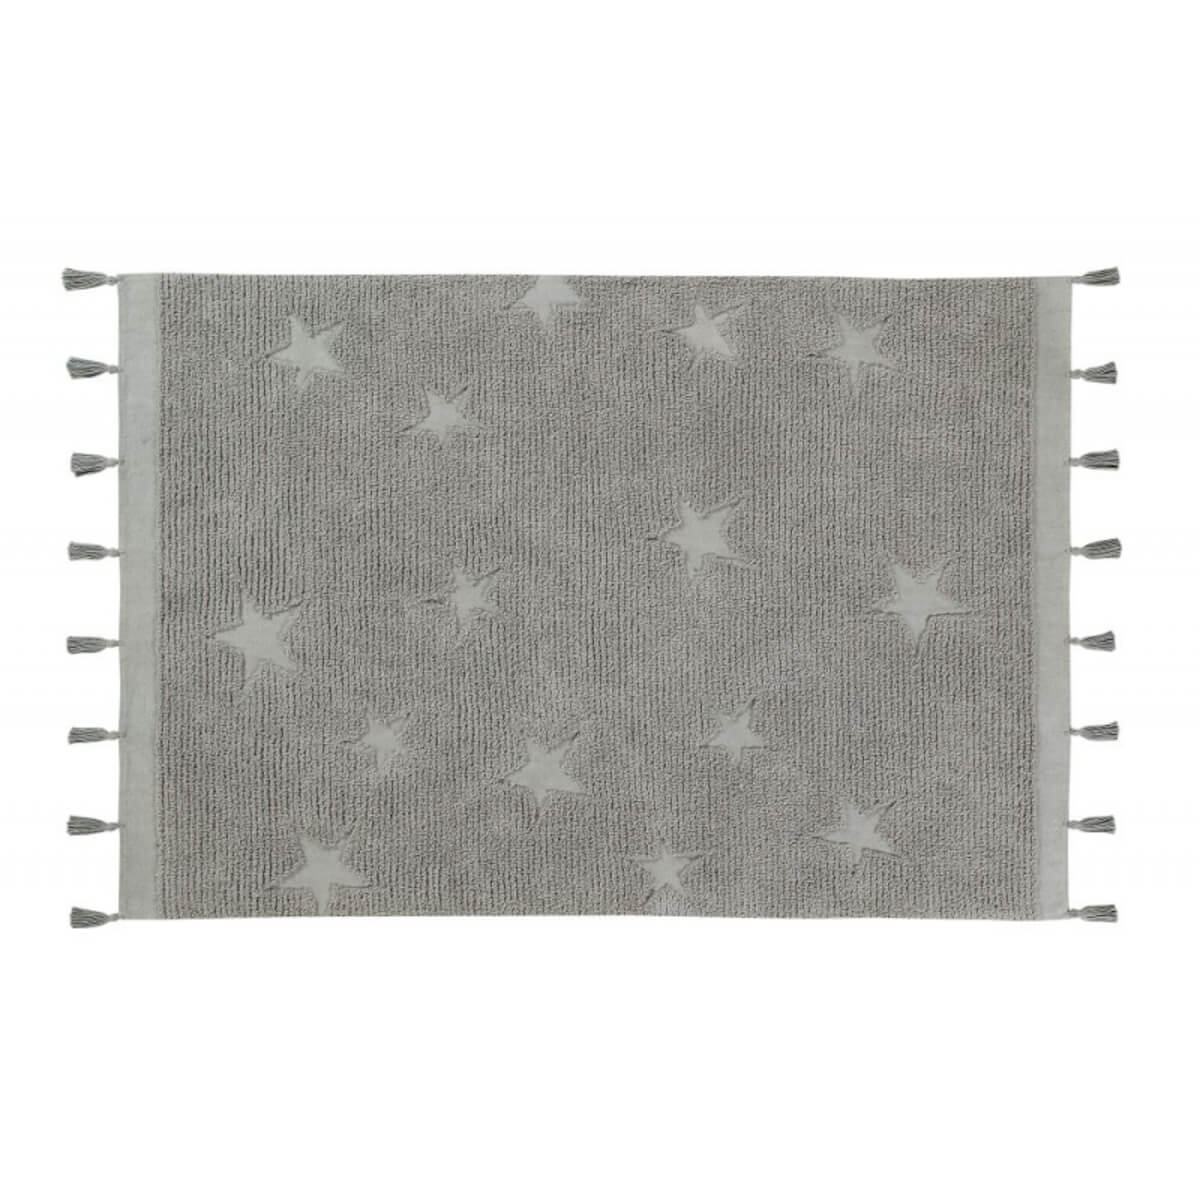 Tapis 120x175cm hippy stars lorena canal